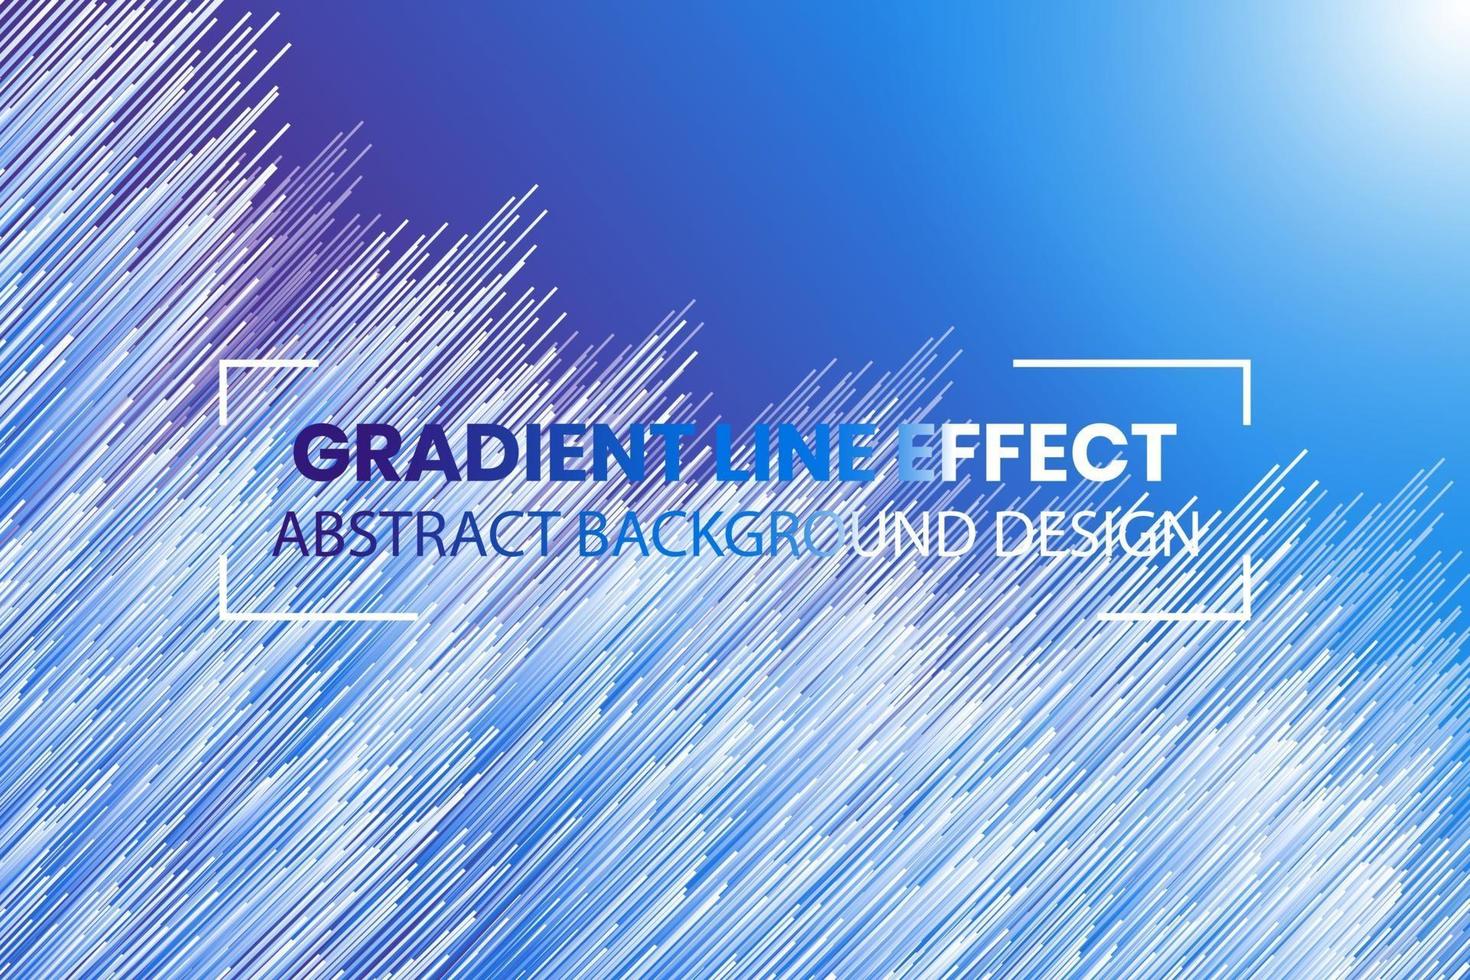 Gradient line effect abstract background design. vector